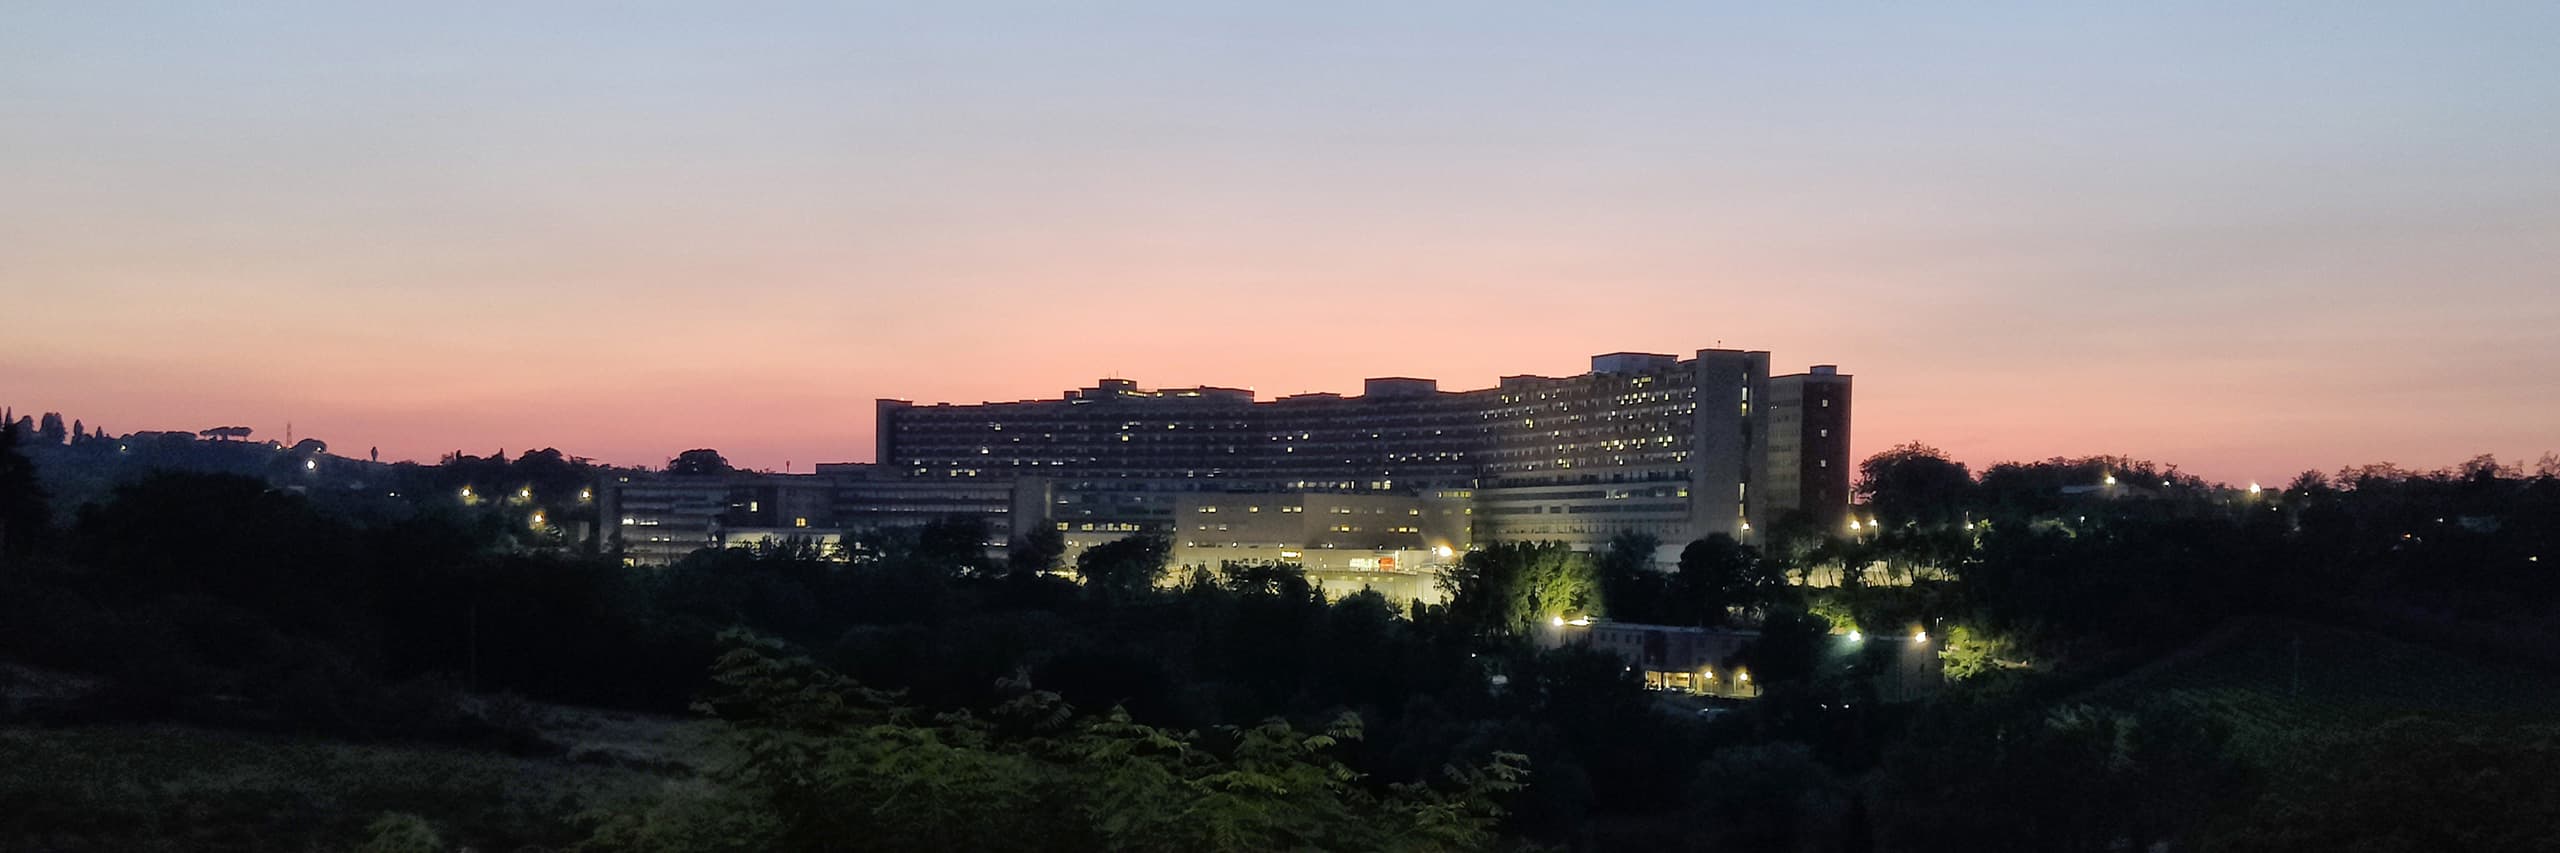 Azienda ospedaliero-universitaria Senese al tramonto